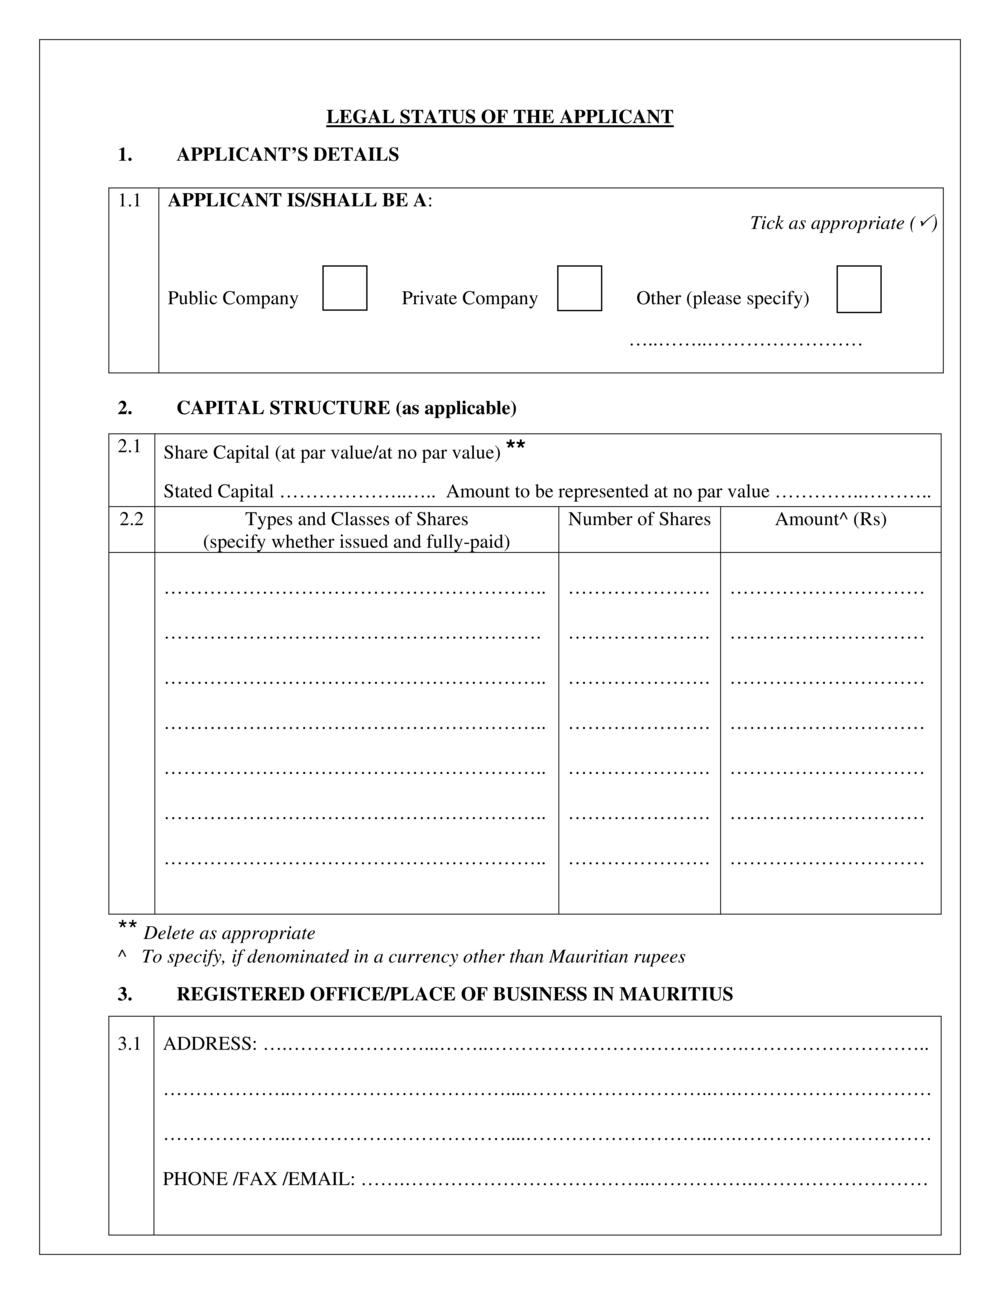 FSC Custodian Services - NON CIS - License Application Form